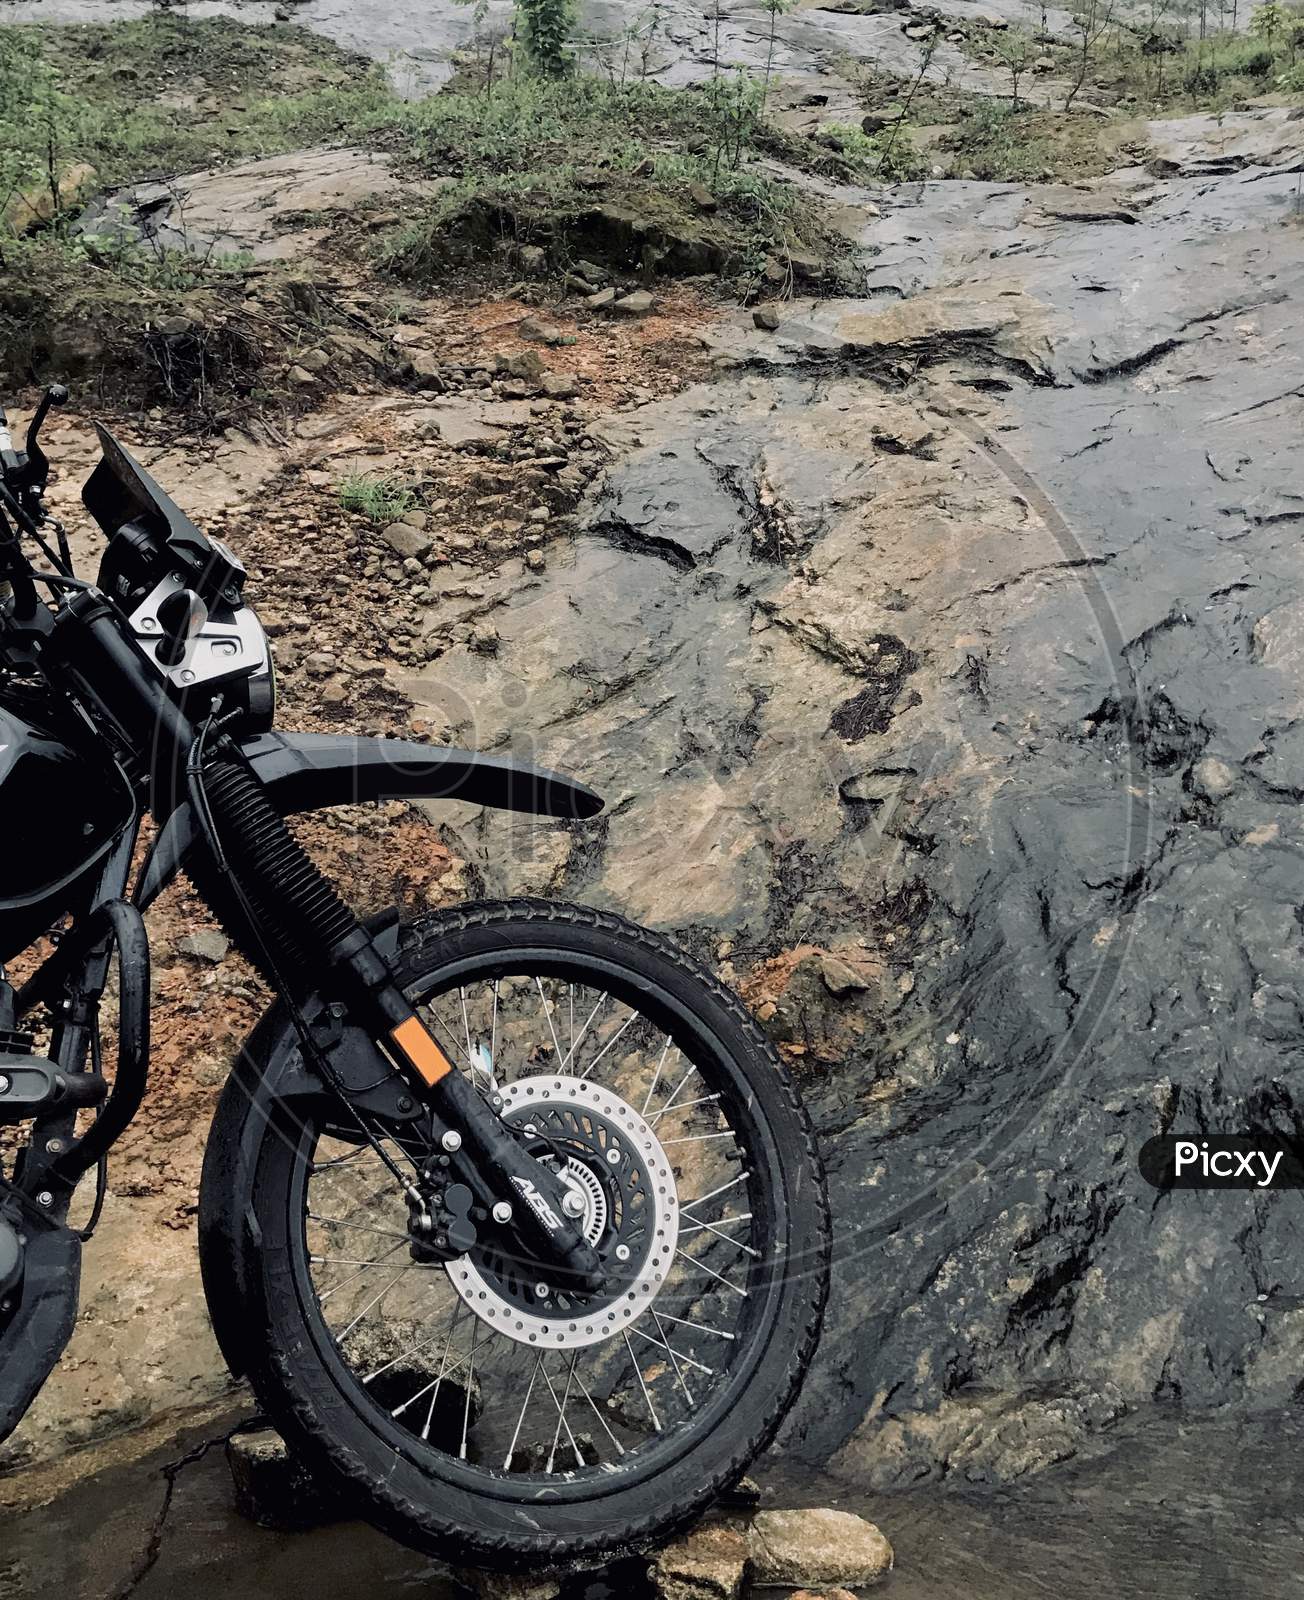 An adventure bike on the rock